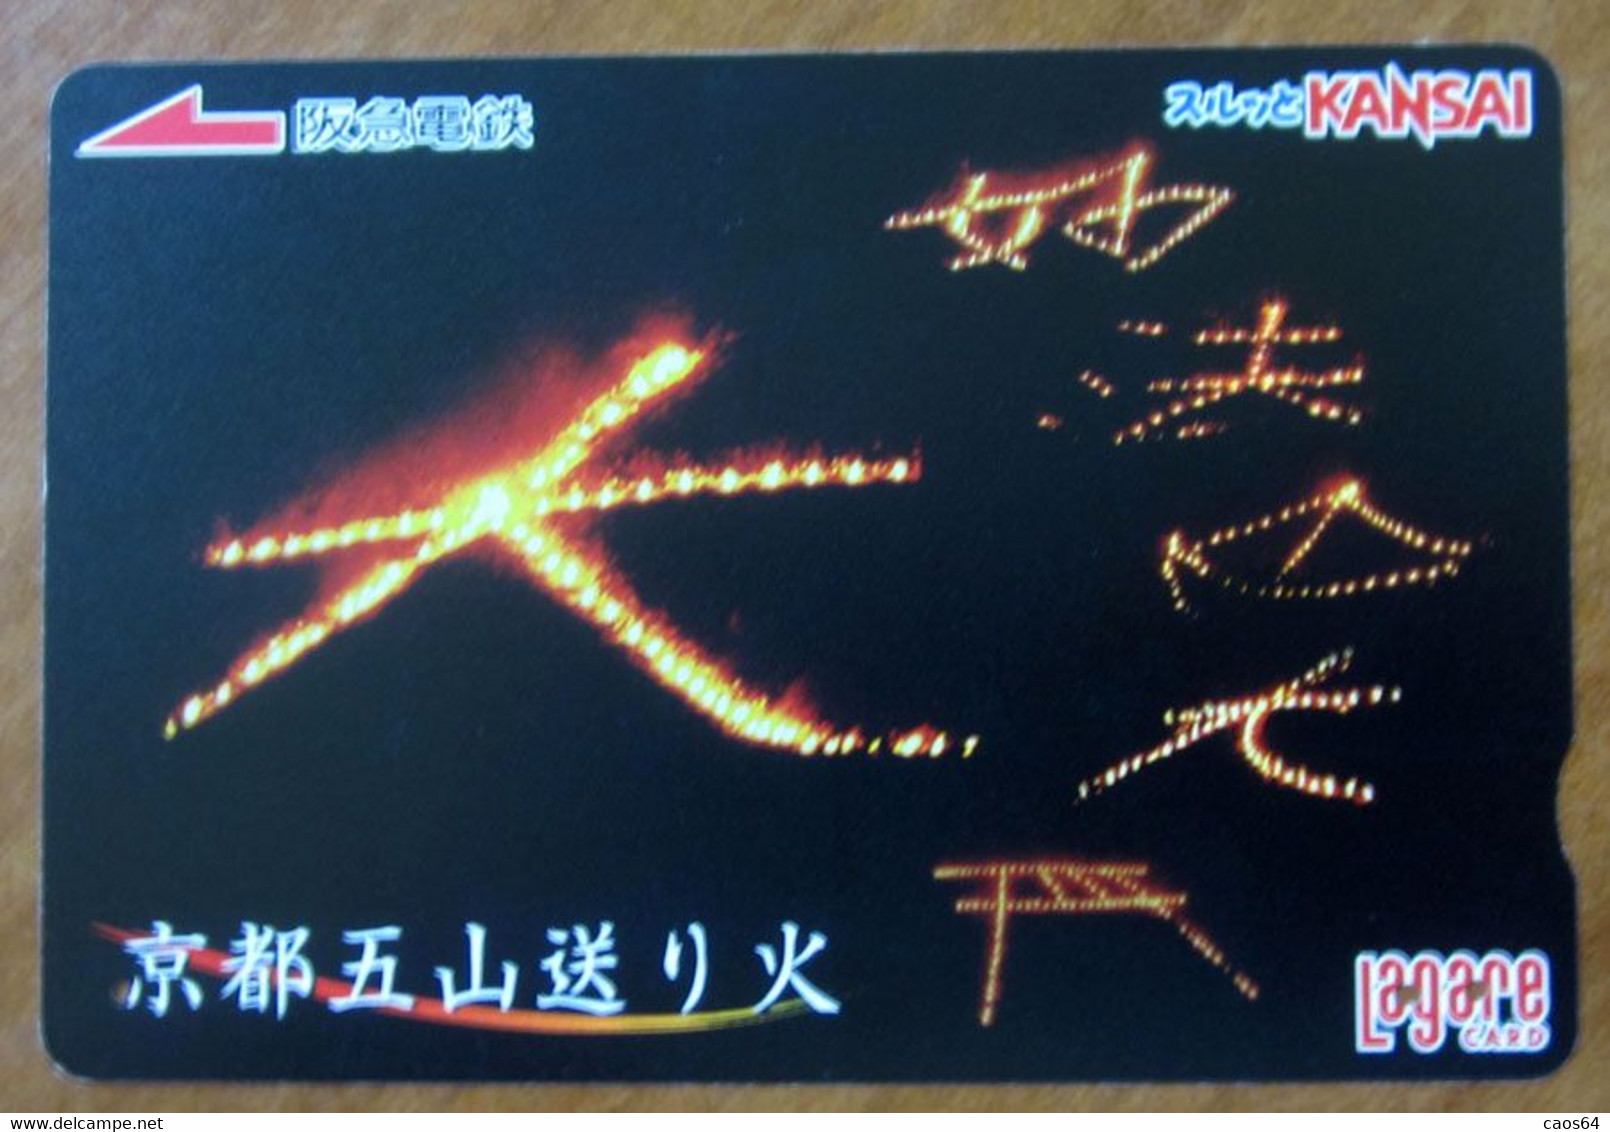 GIAPPONE Ticket Biglietto Alfabeto Lettere - Kansai Railway  Card 1.000 ¥ - Usato - Welt